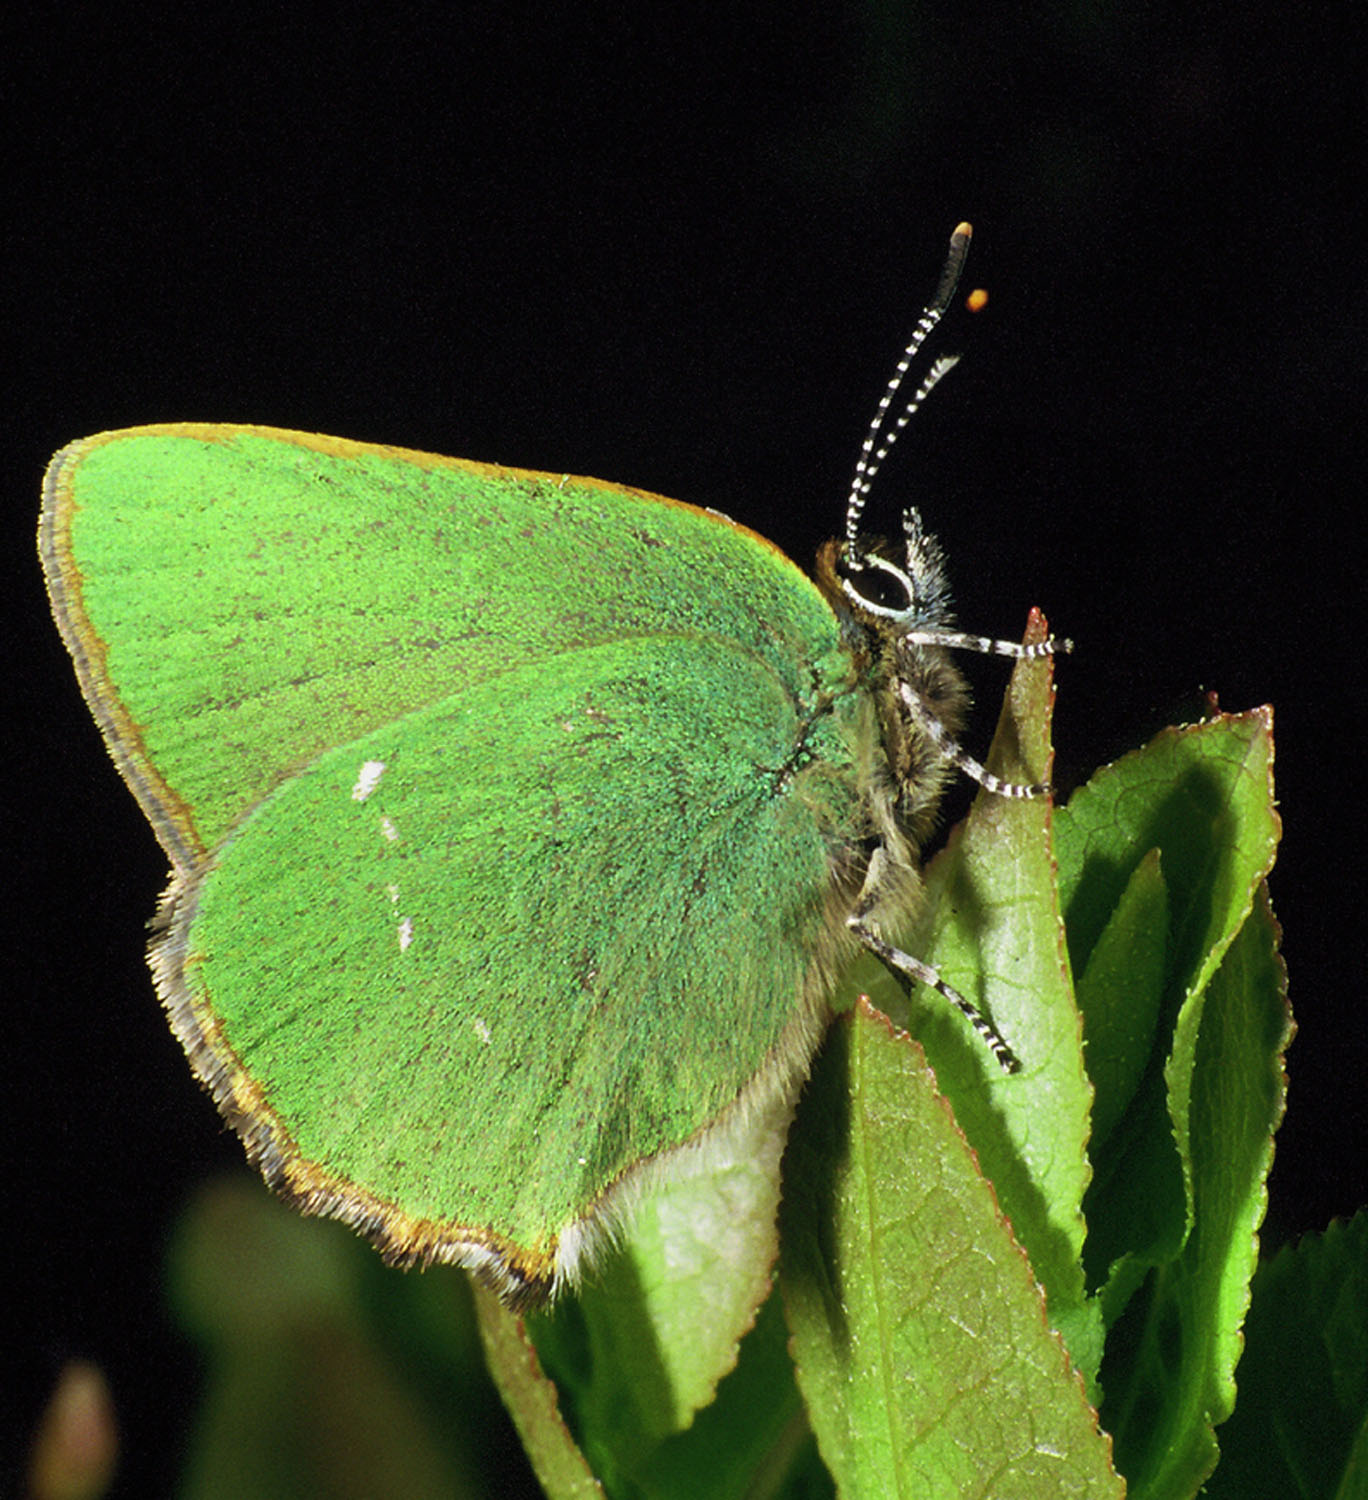 The Green Hairstreak butterfly